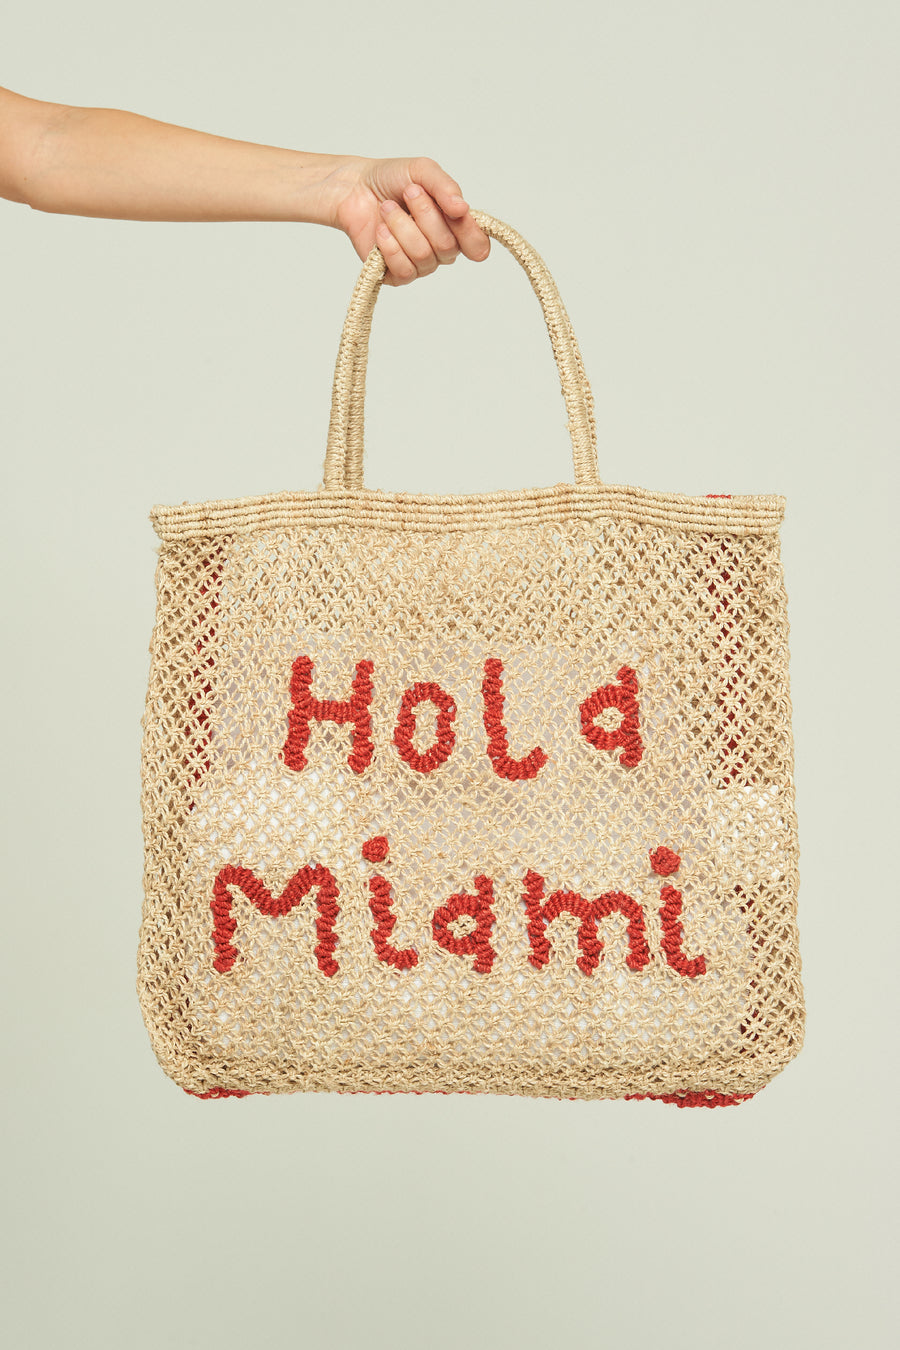 The Jacksons Hola Miami Bag - shopsigal